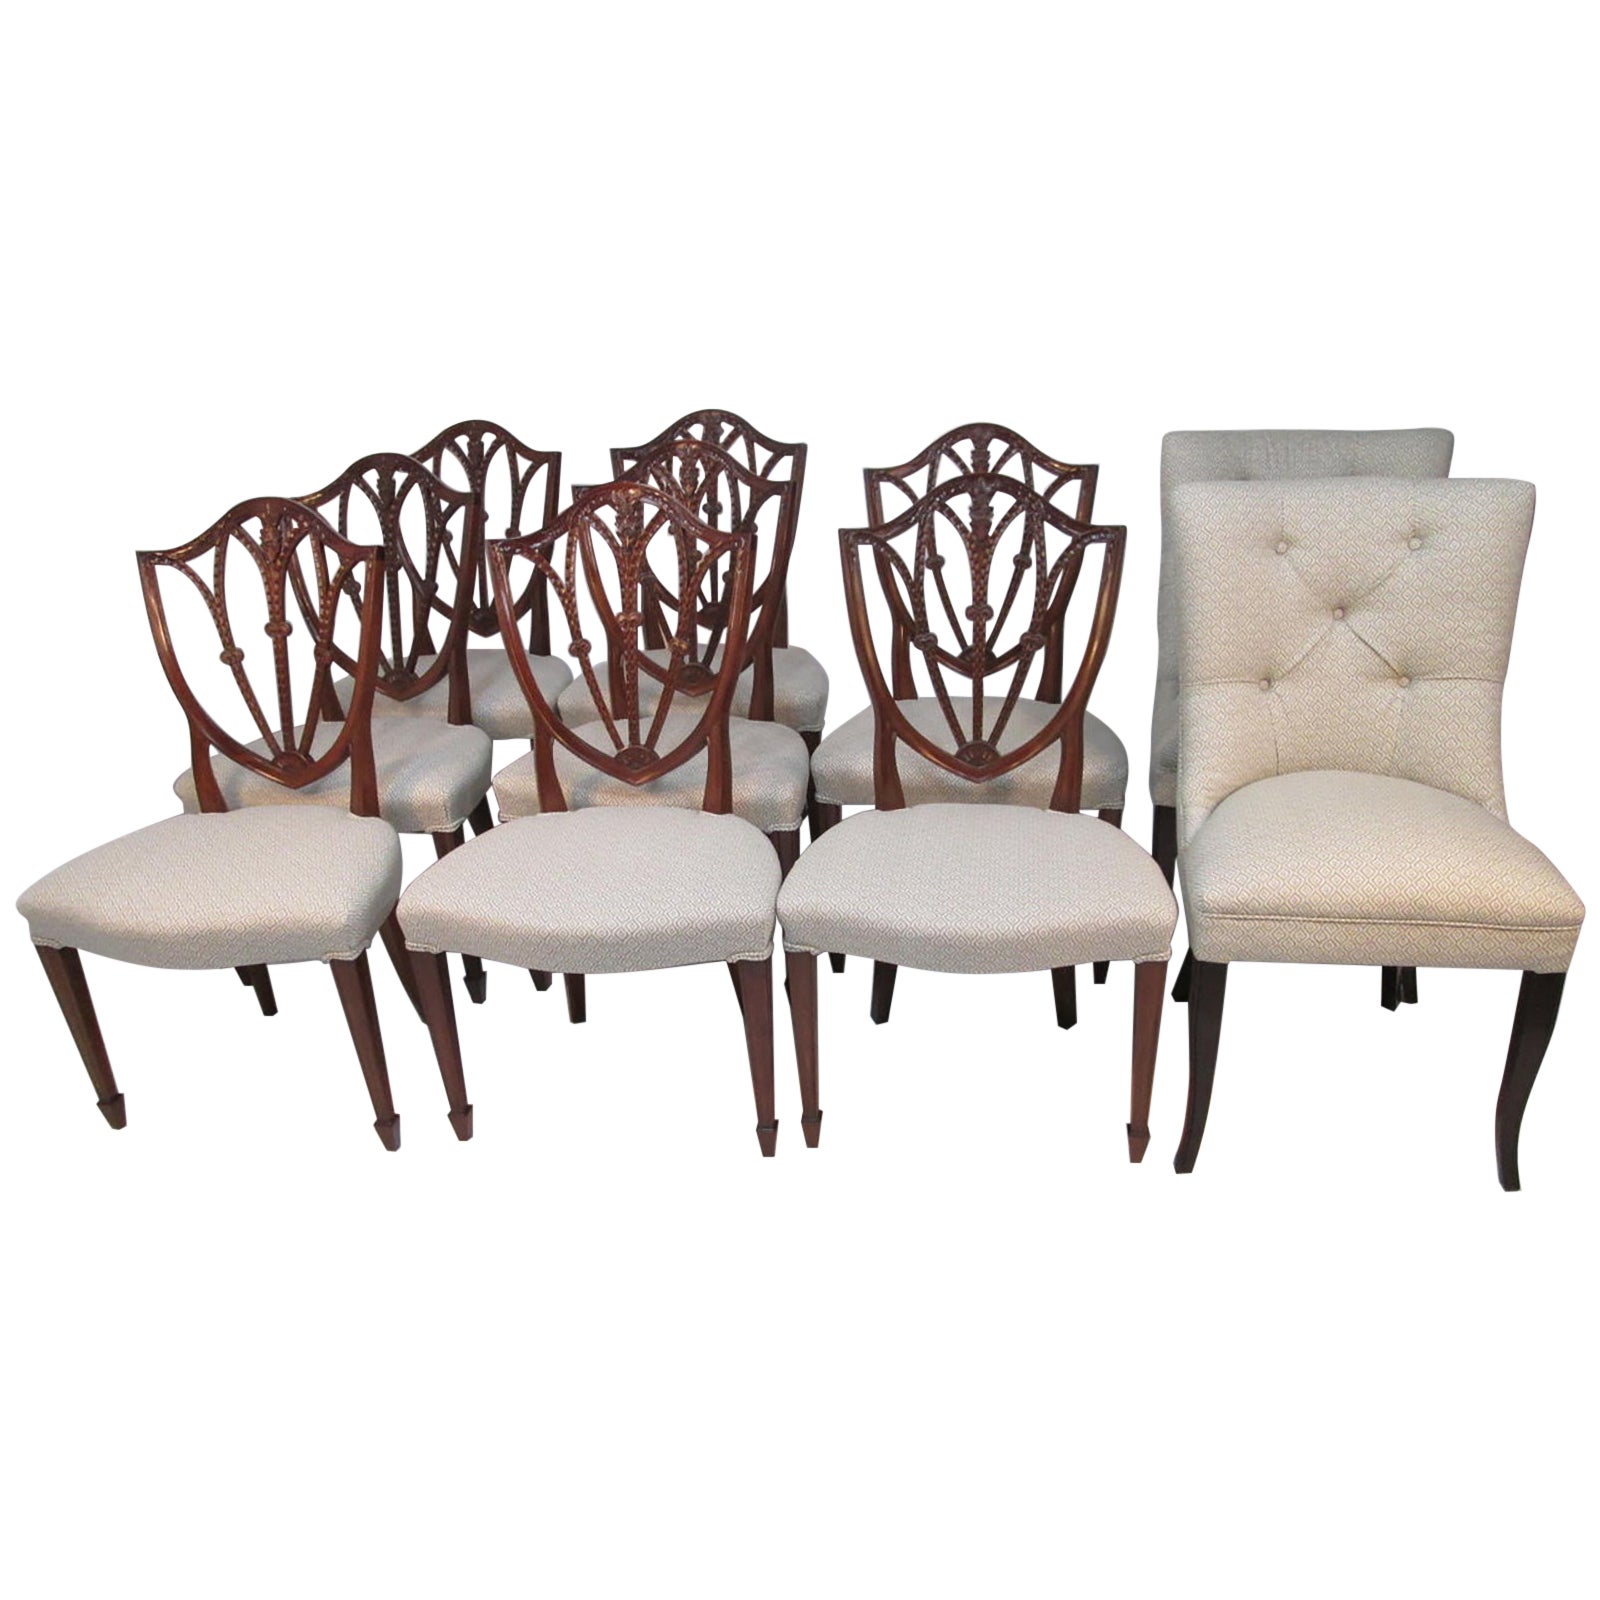 Set of Ten Mahogany Dining Room Chairs